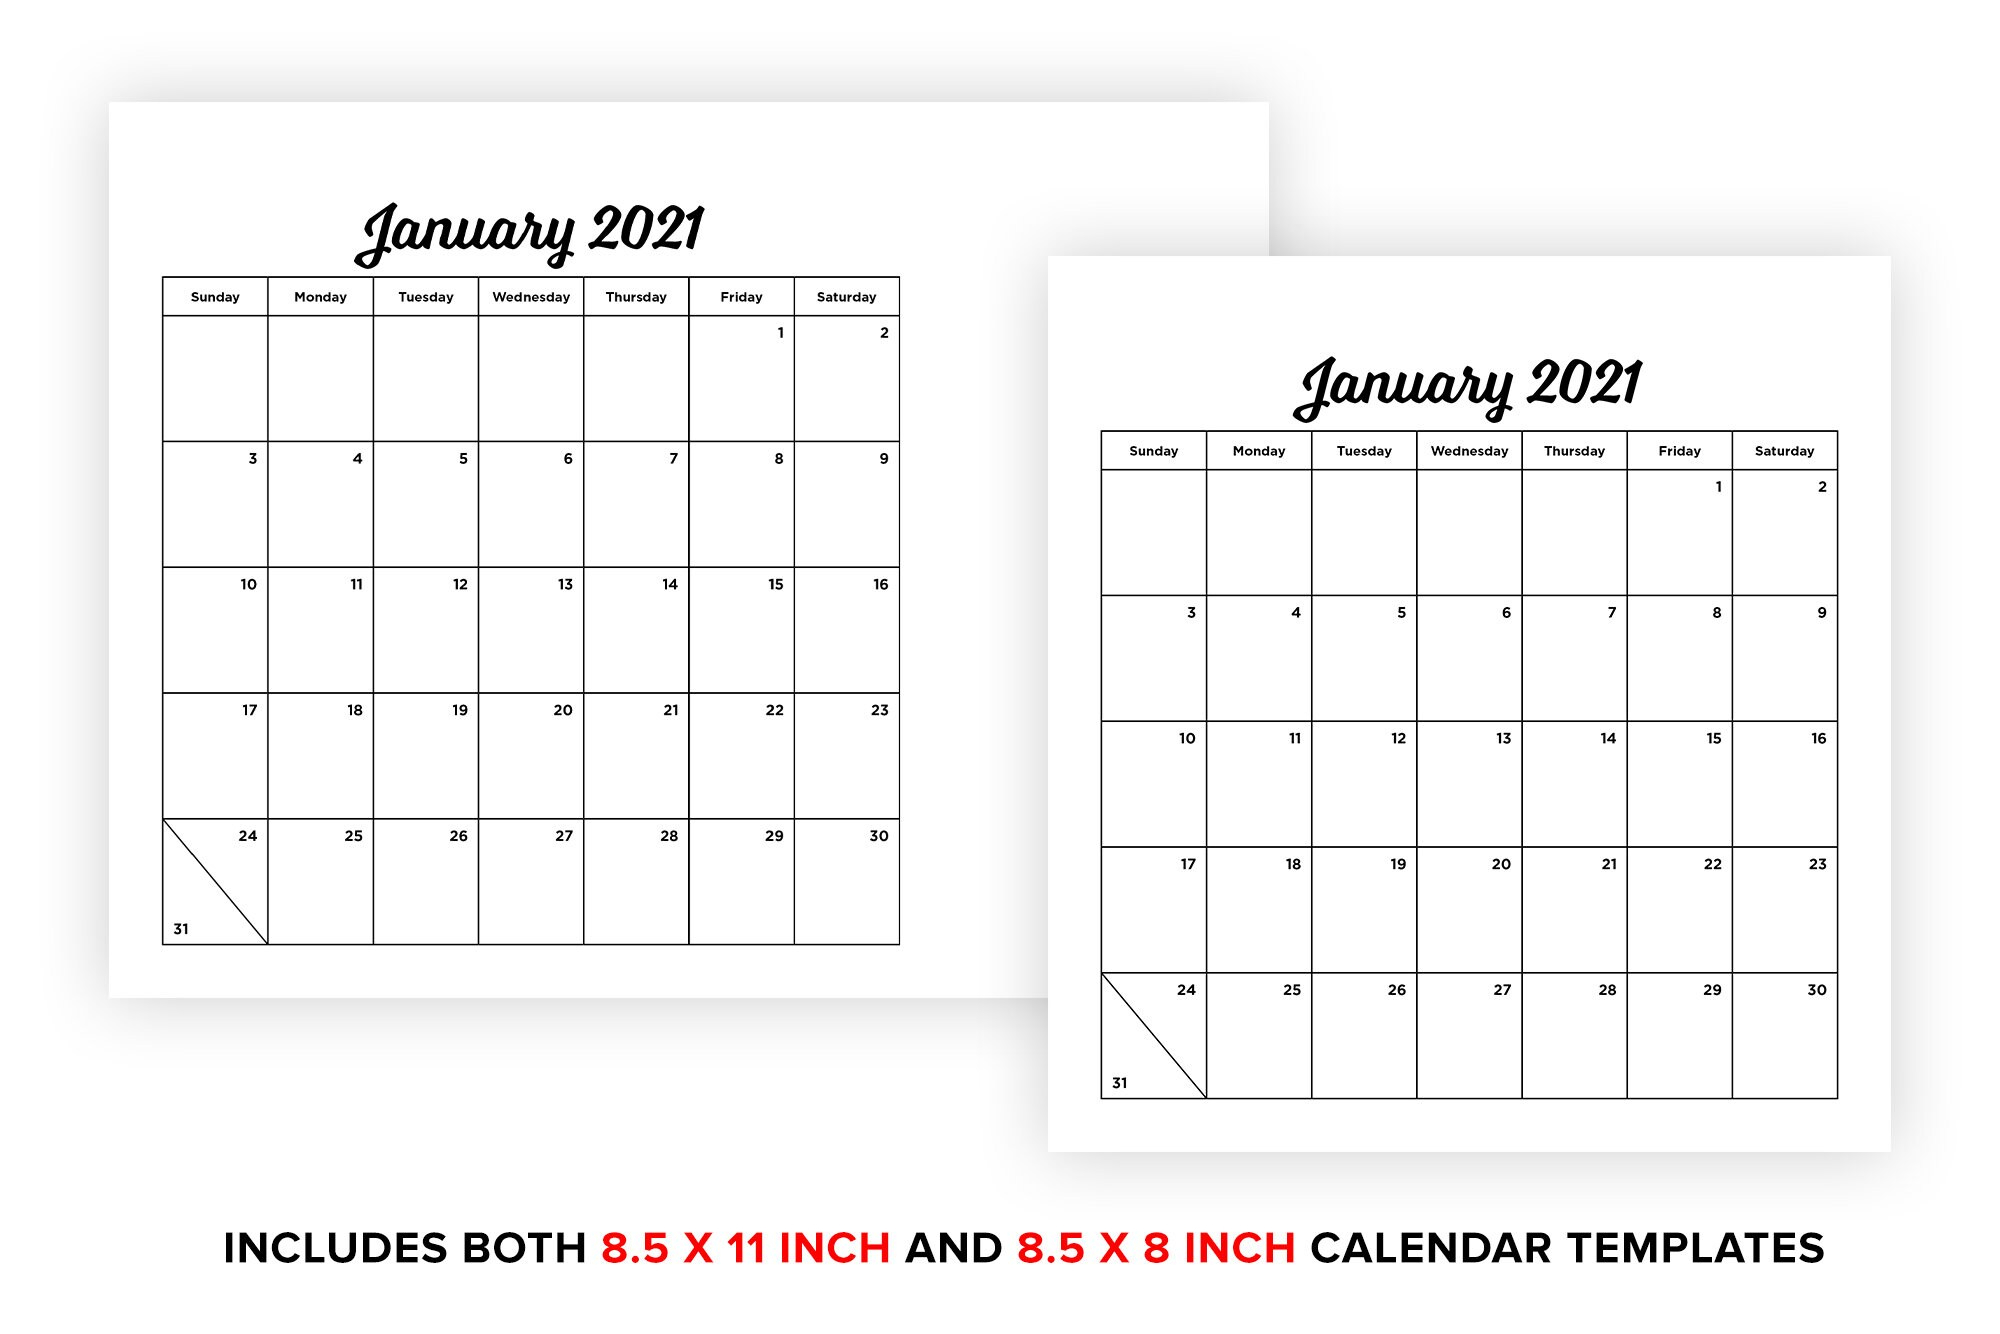 Sale 8 5 X 11 8 5 X 8 Inch 2021 Calendar Template 1